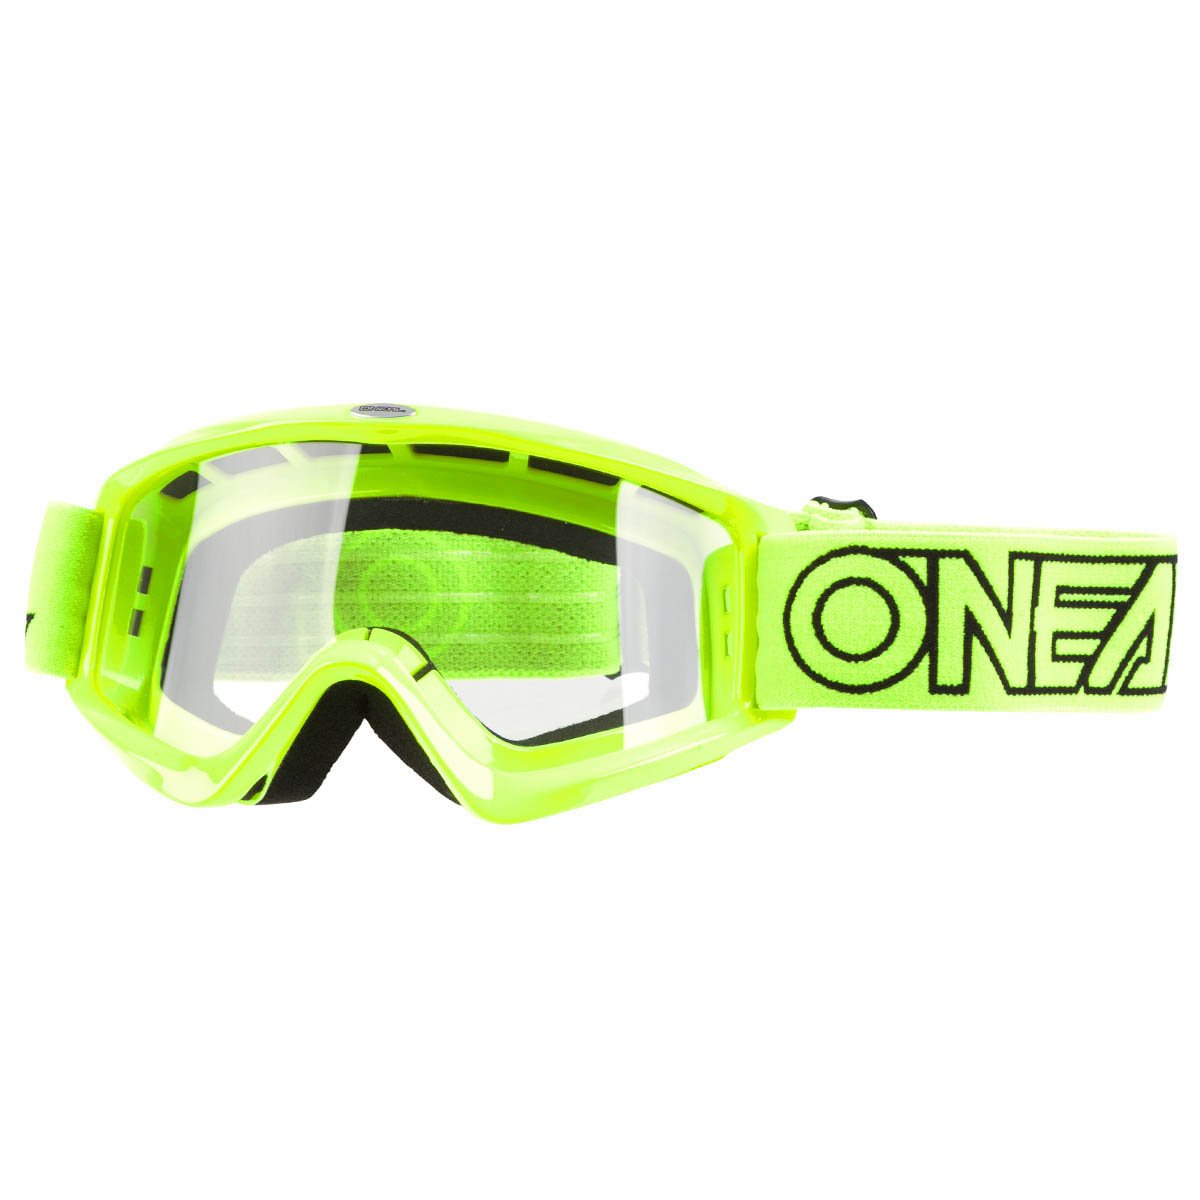 ONEAL B-ZERO Goggle Motocross Downhill Cross MX Goggles DH Enduro BZero Motorcycle 